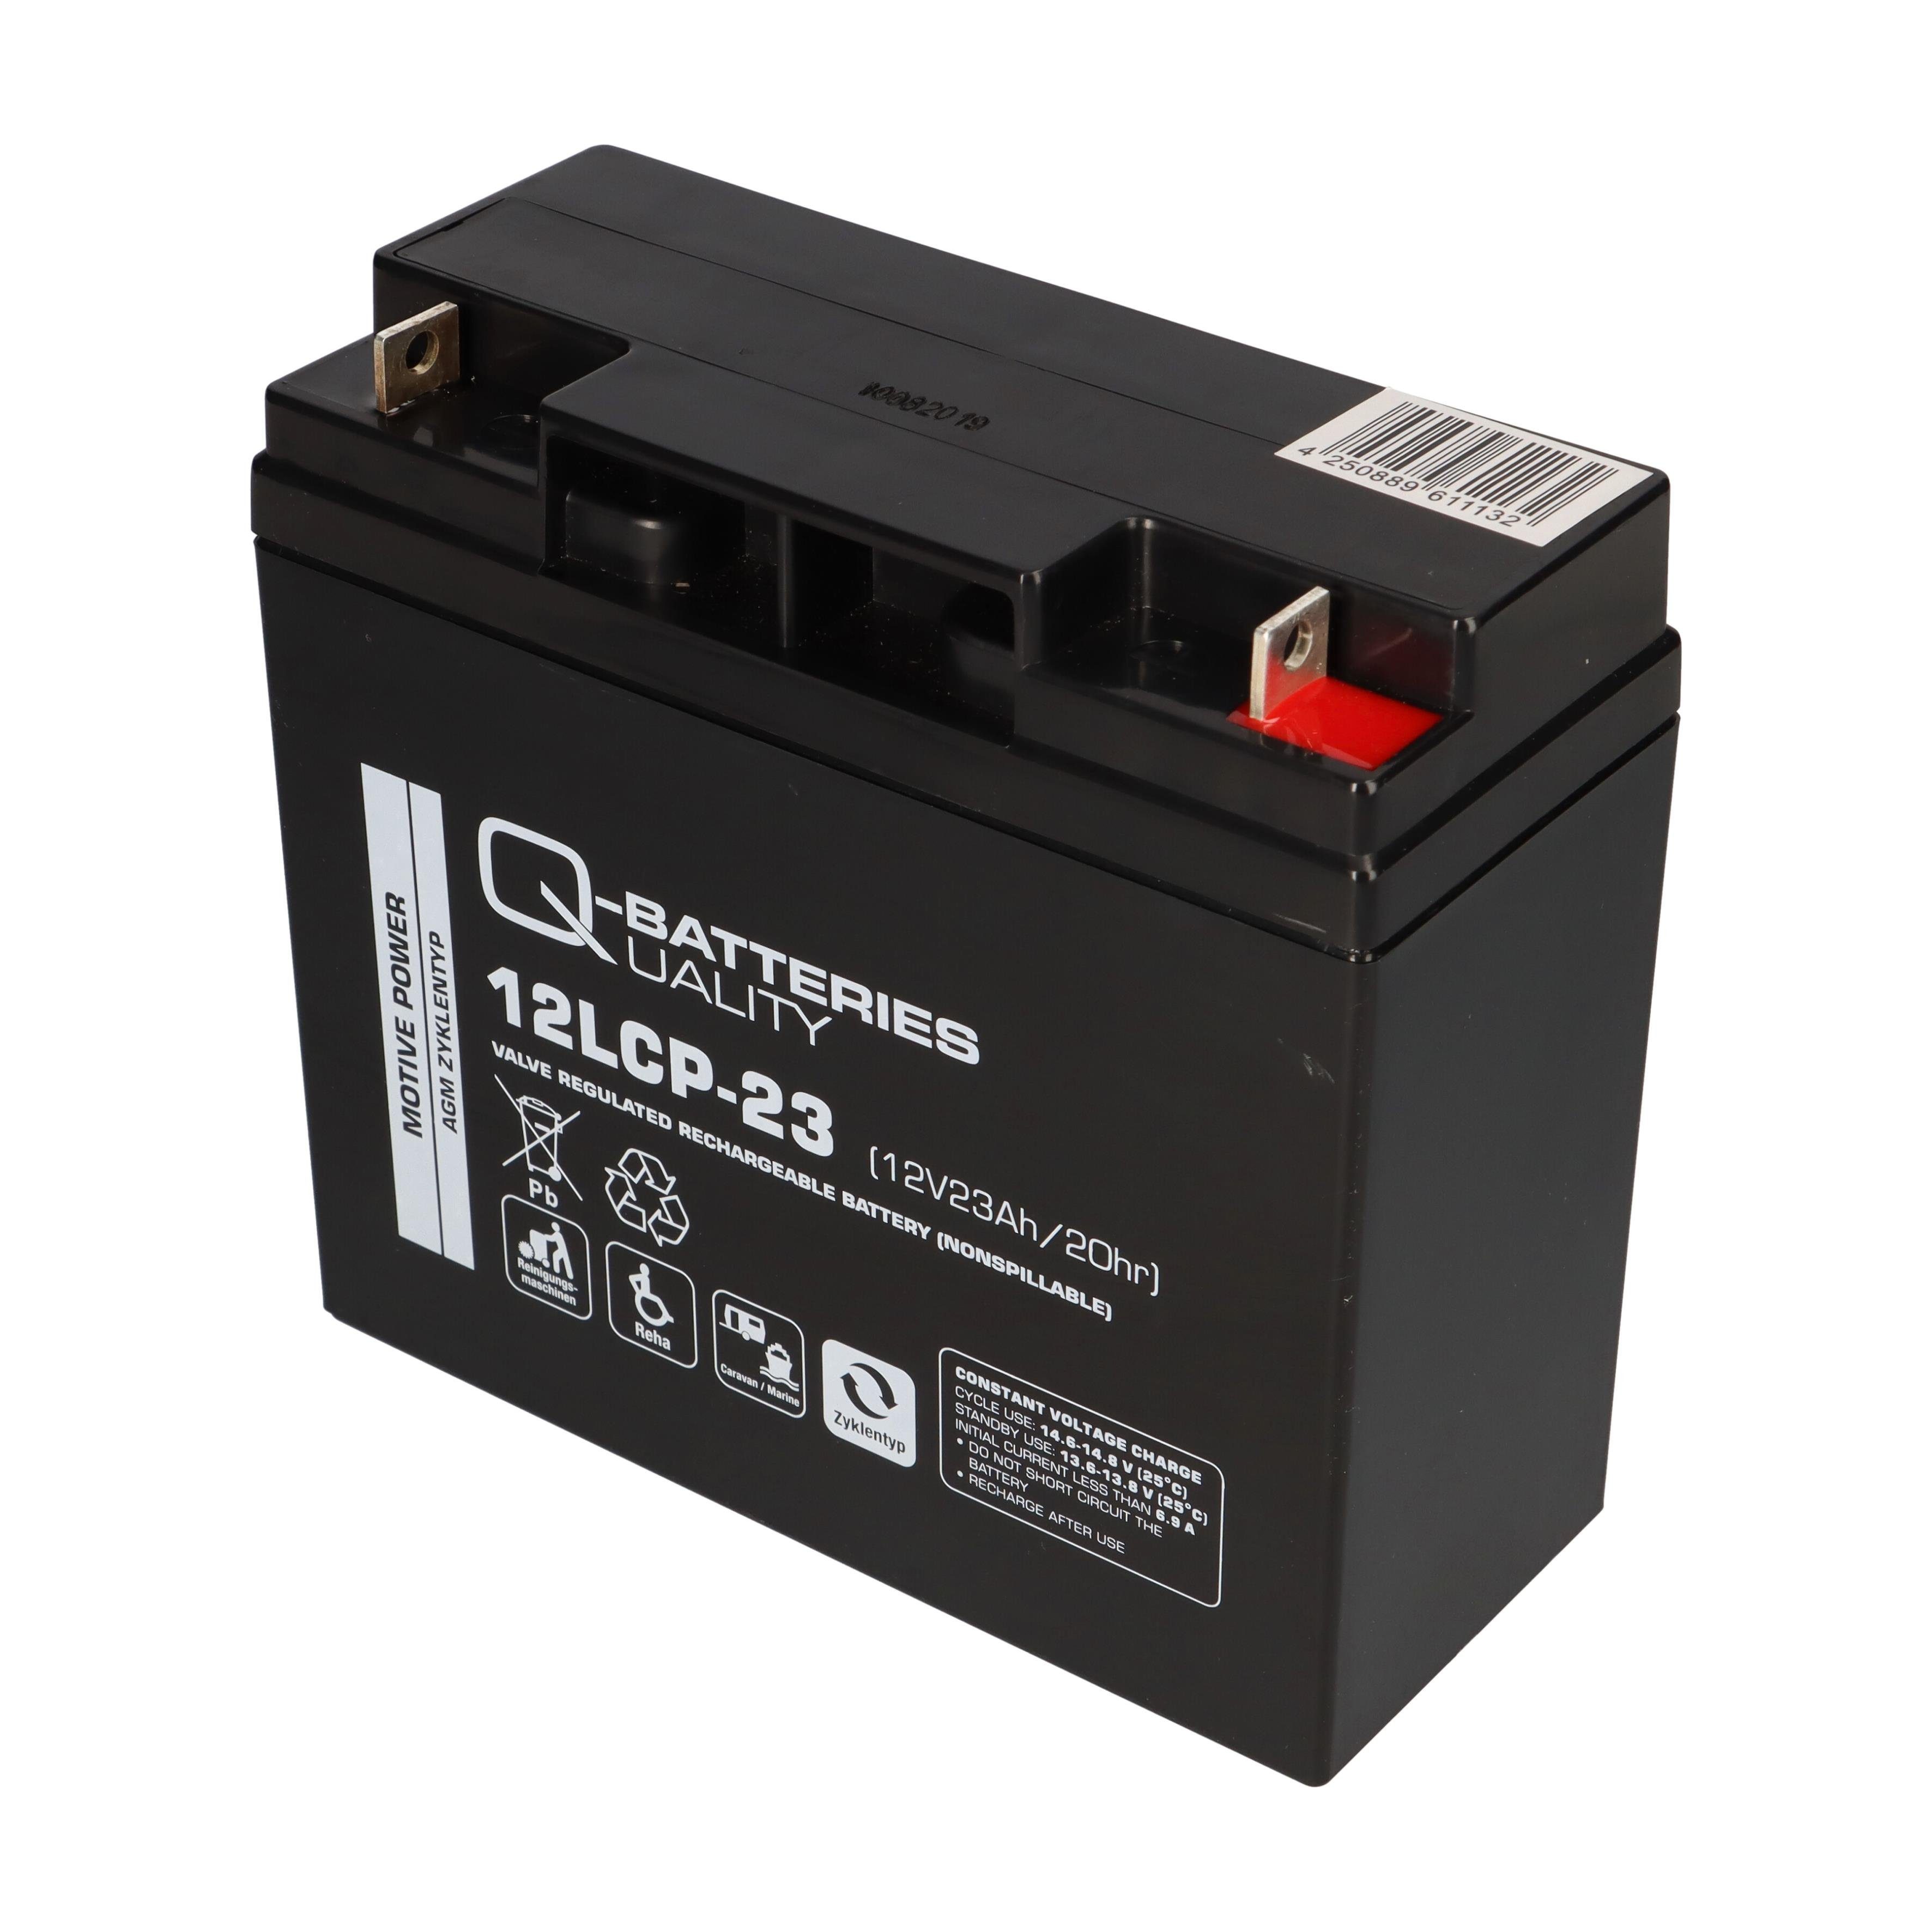 Q-Batteries 1x - - 23Ah 12LCP-23 Blei Q-Batteries Akku 12V Zyklentyp AGM Bleiakkus / Deep